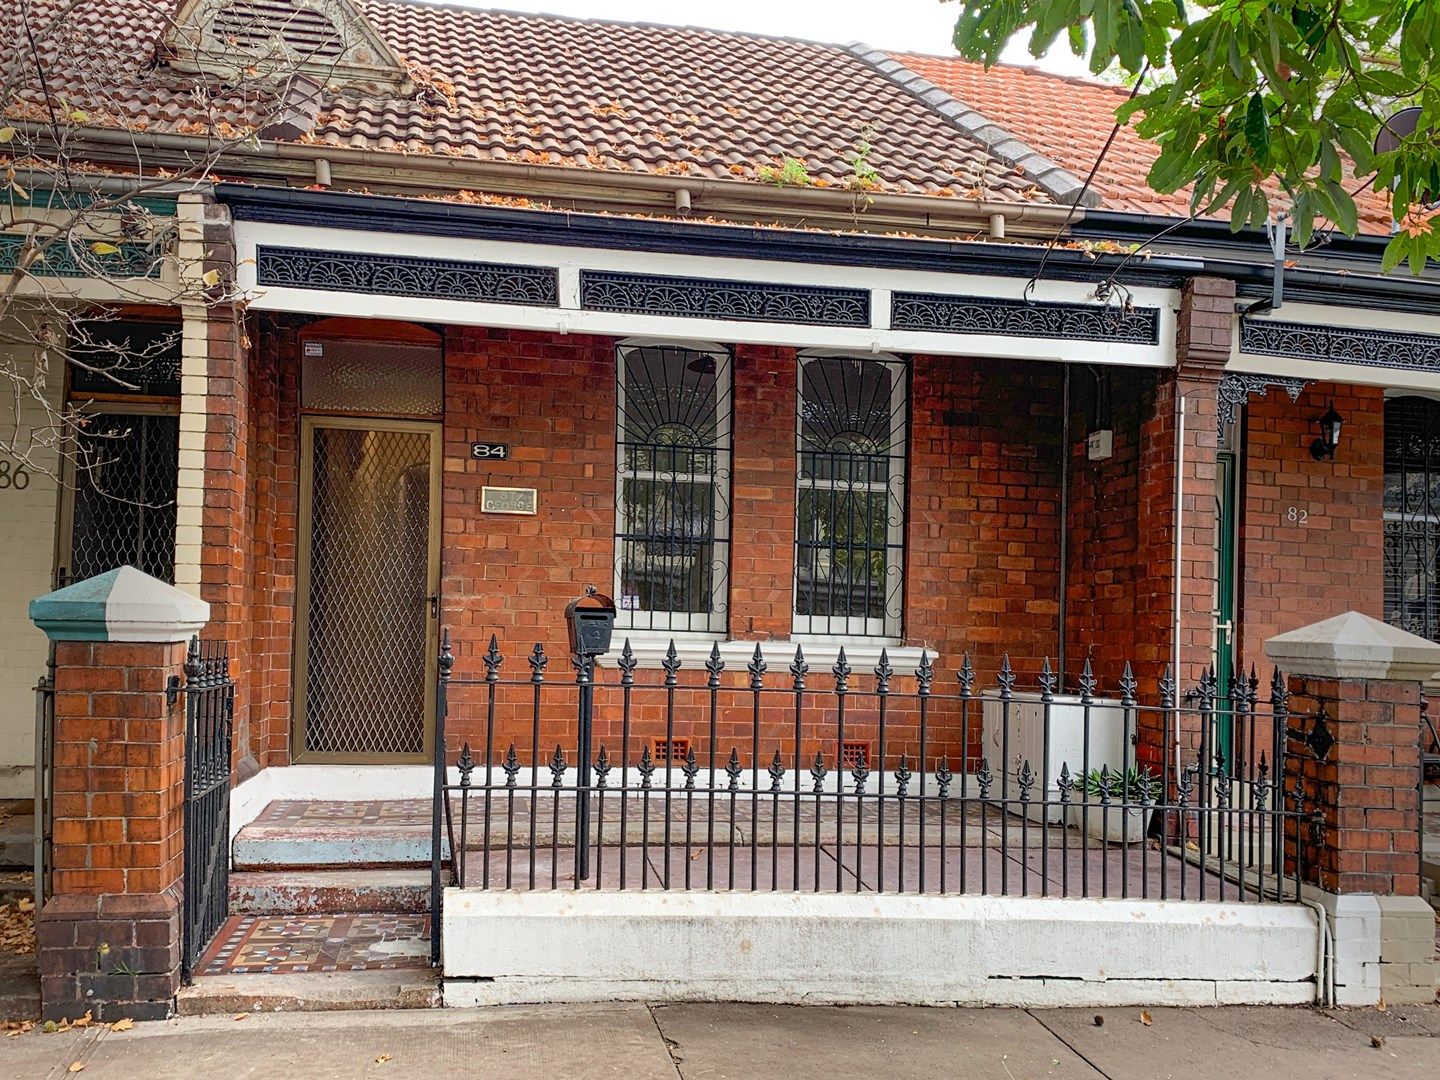 3 bedrooms House in 84 Baptist Street REDFERN NSW, 2016